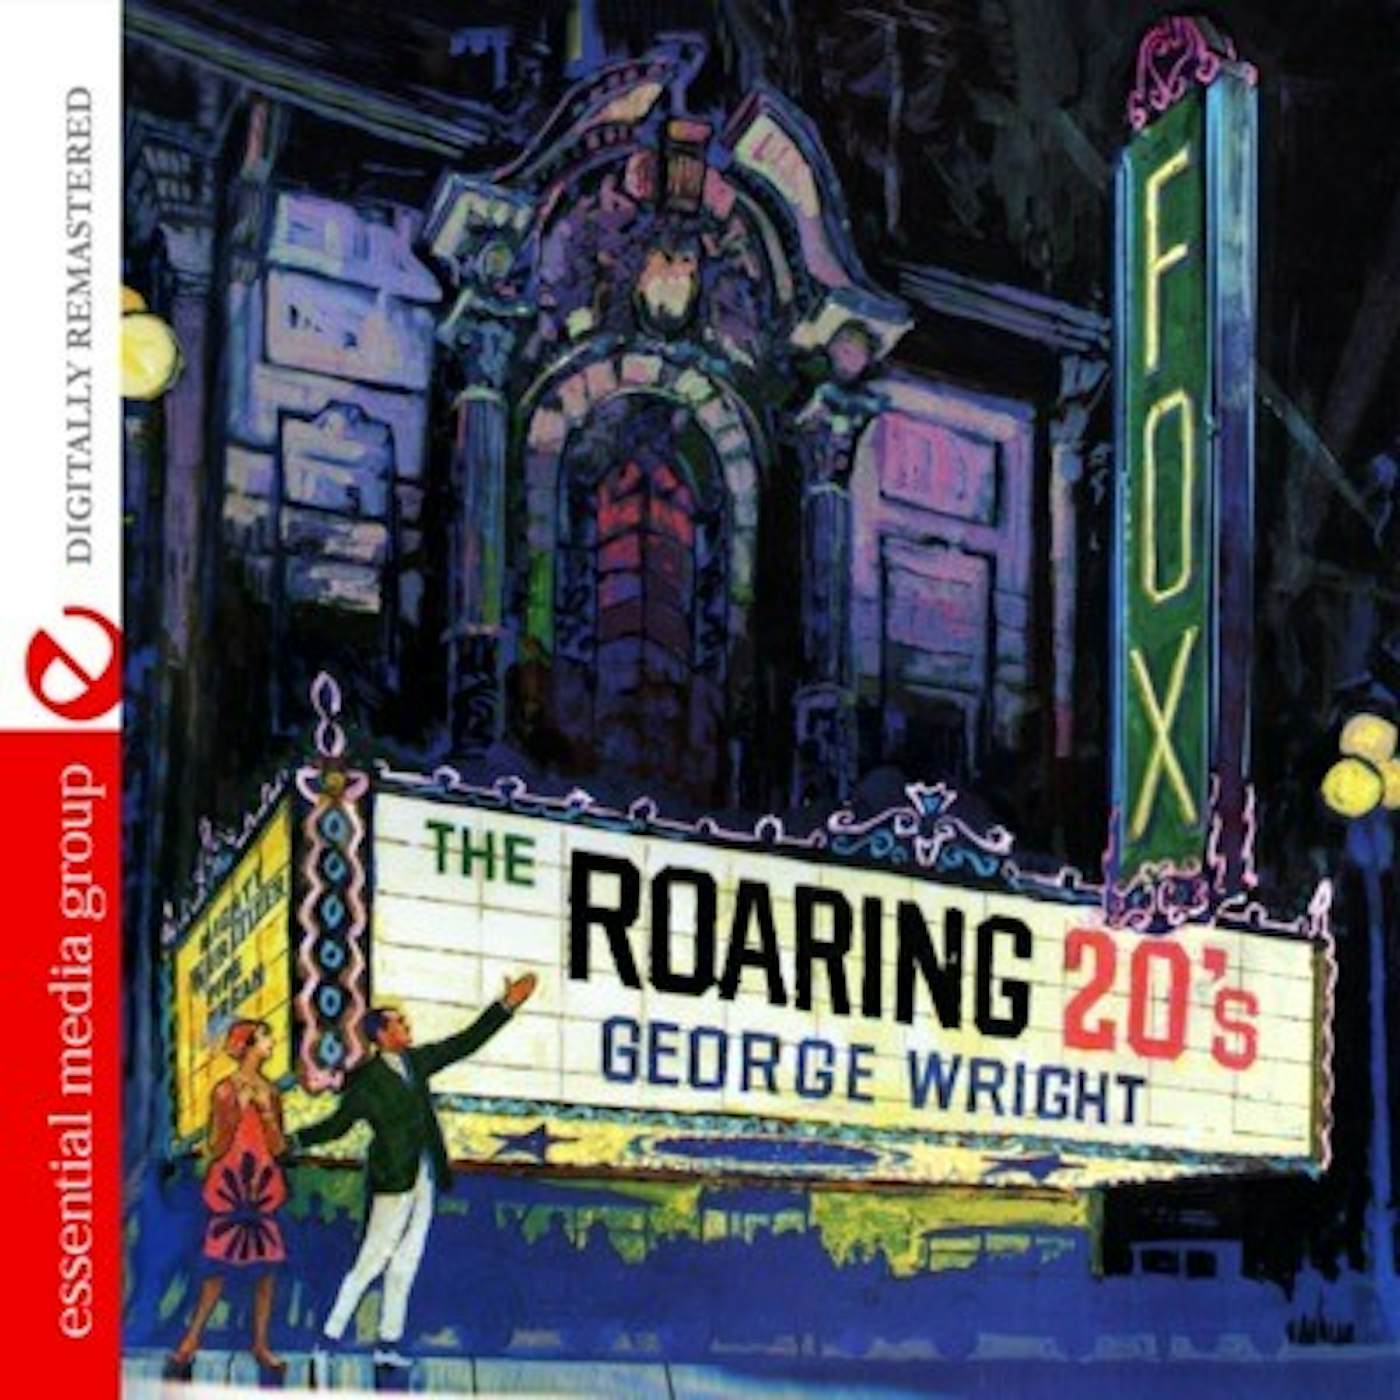 George Wright ROARING 20'S CD